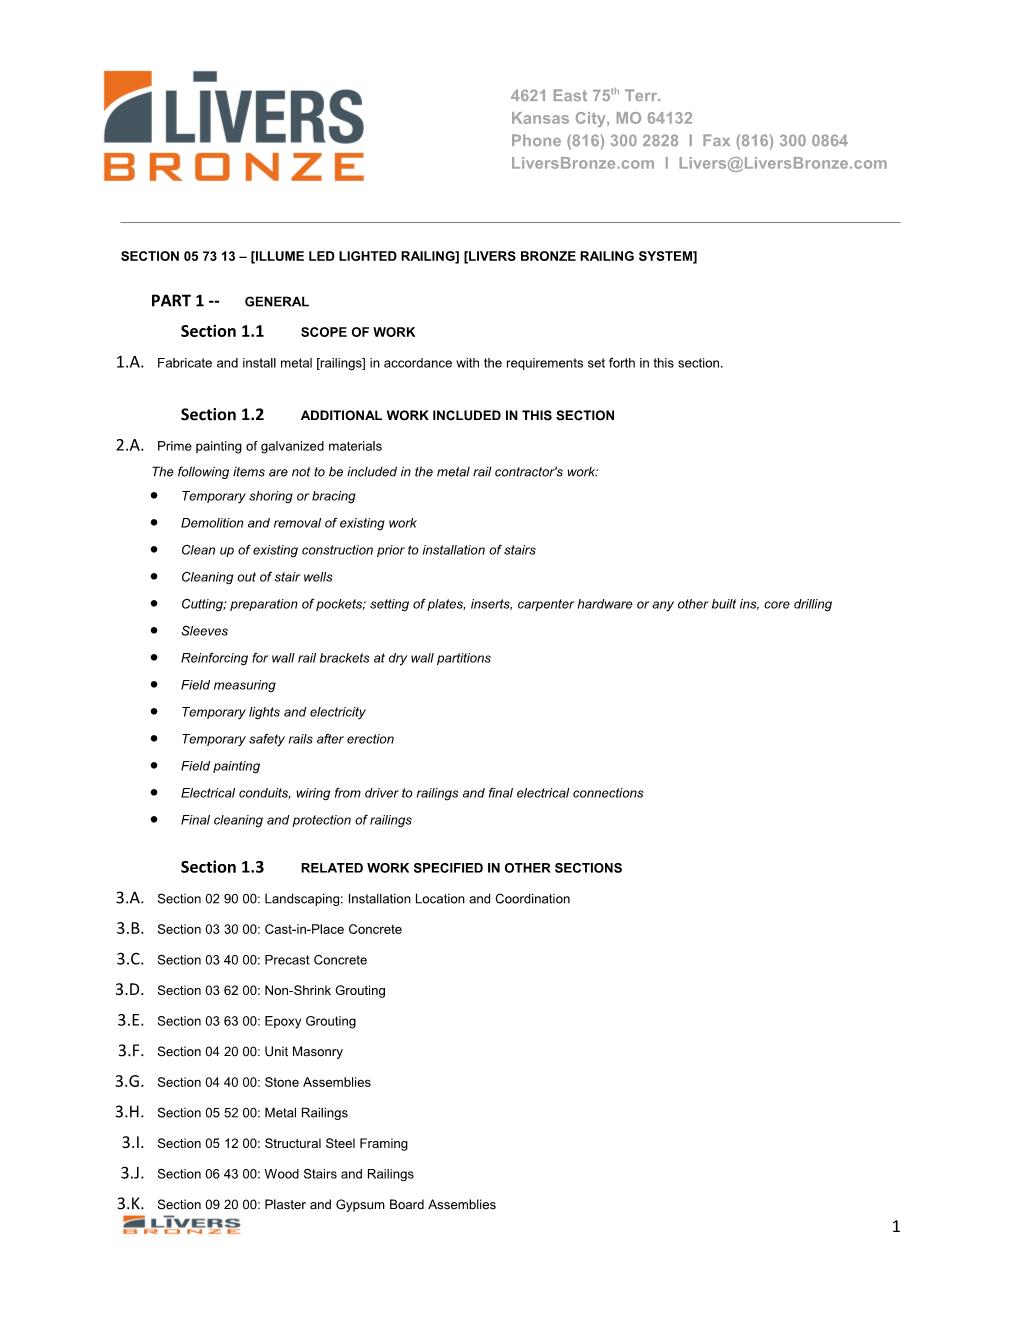 Section 05 73 13 Illume Led Lighted Railing Livers Bronze Railing System